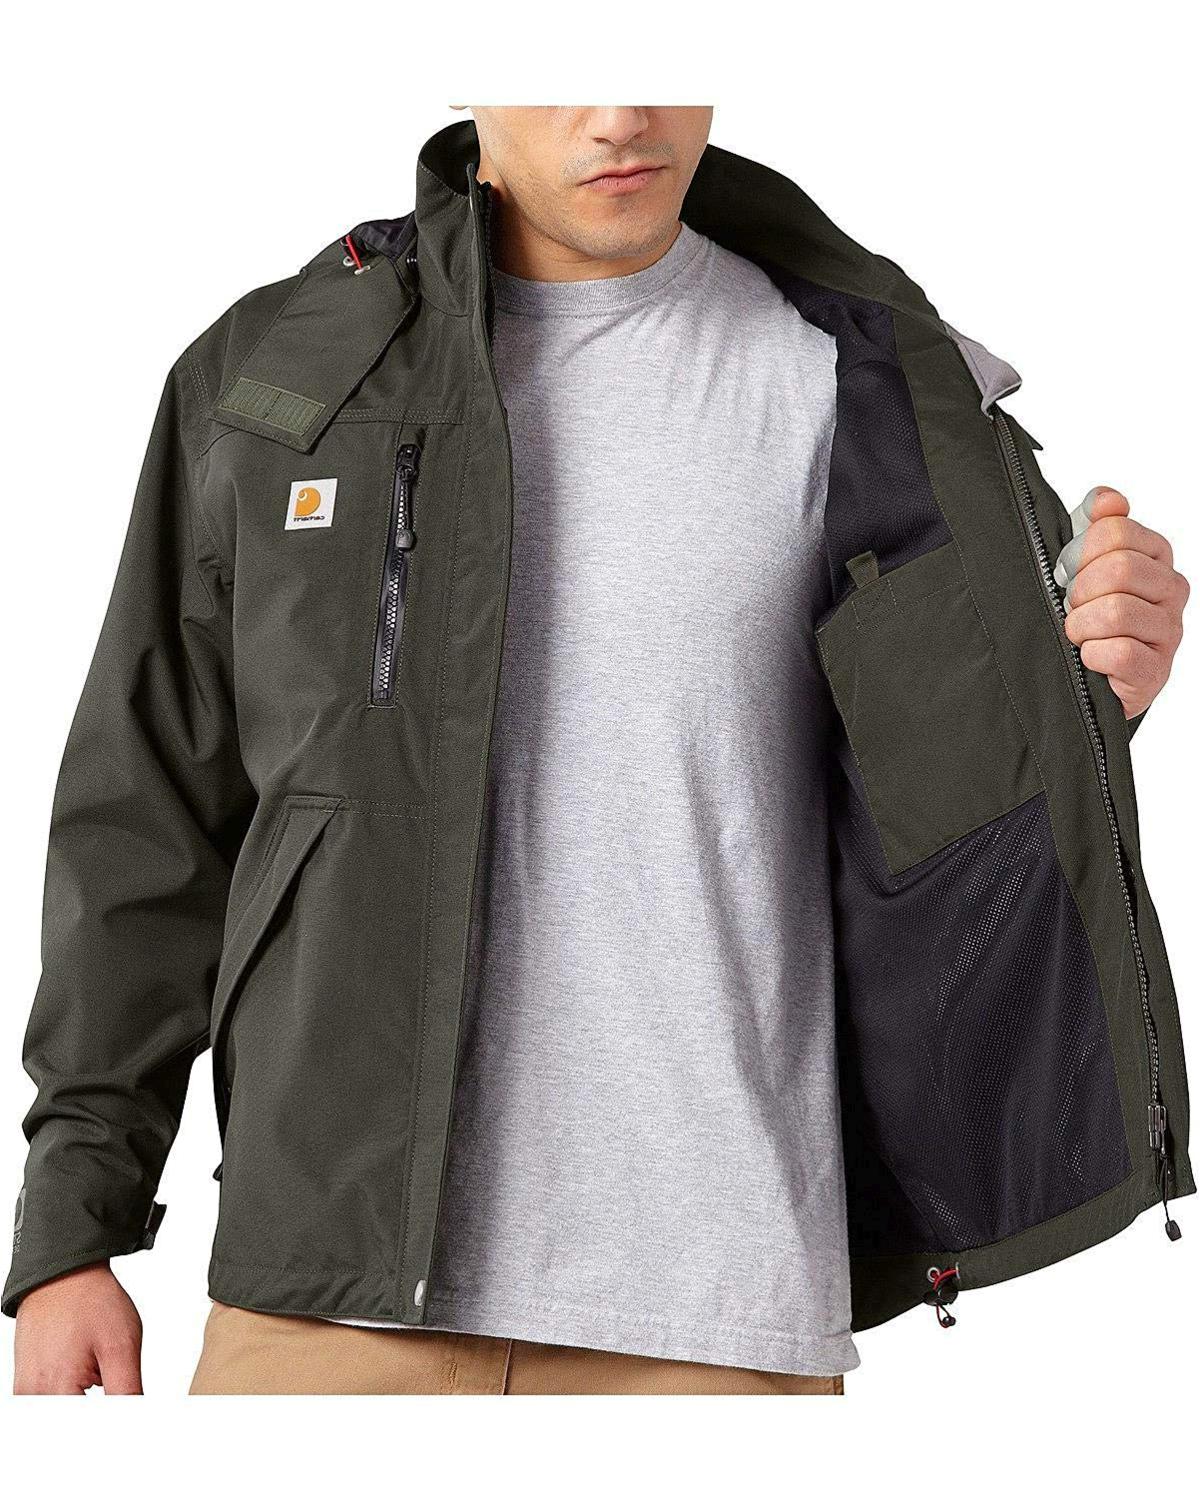 Carhartt Men's Big & Tall Shoreline Jacket Waterproof, Olive, Size 2.0 ...